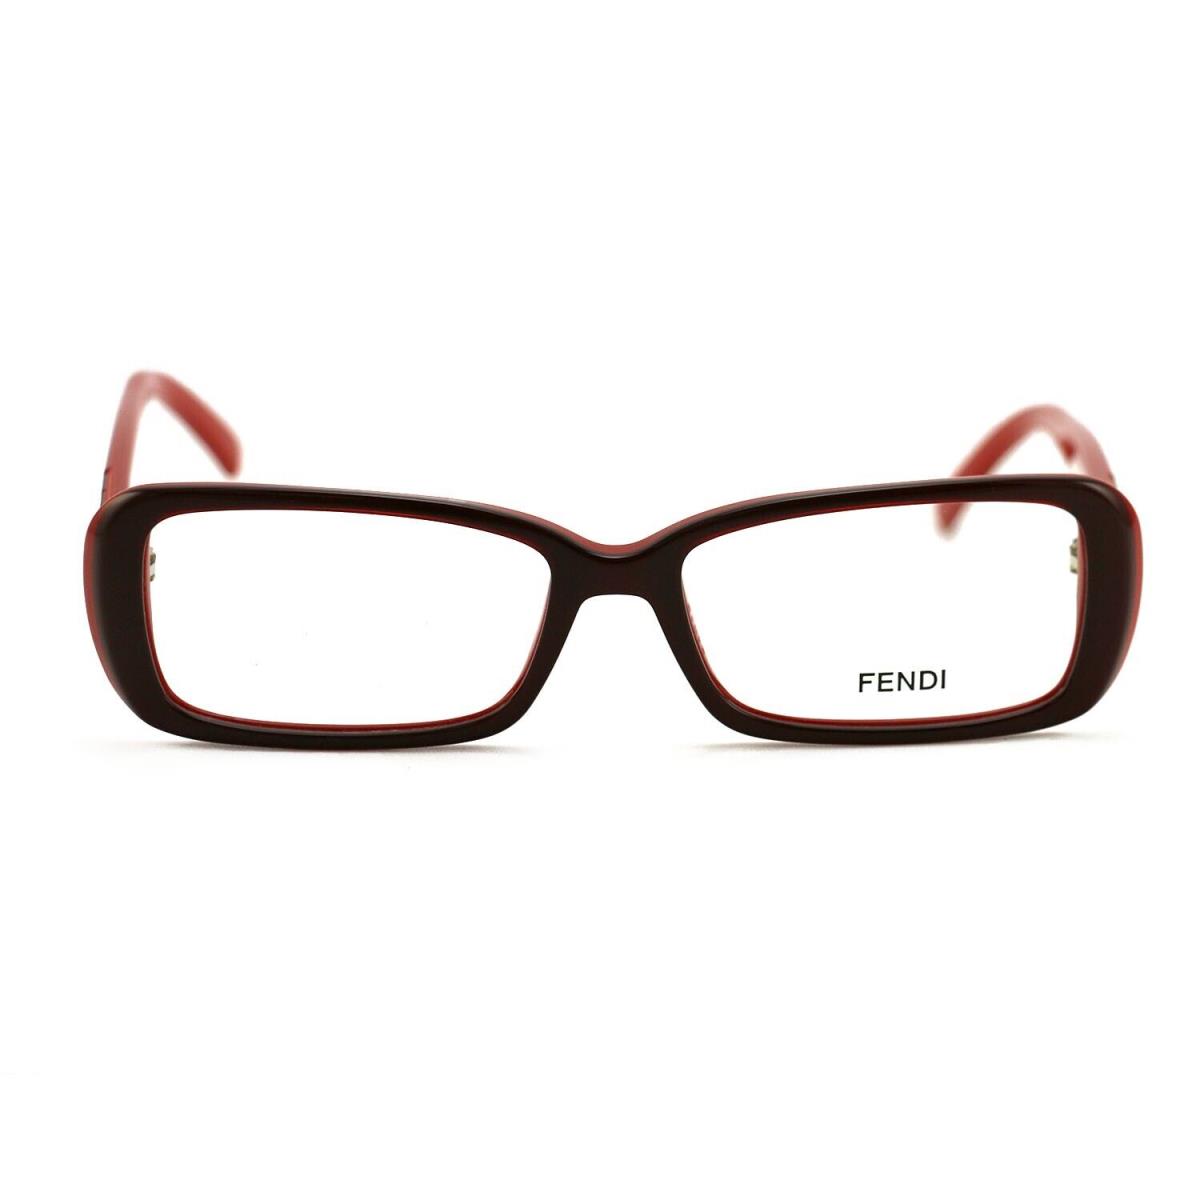 Fendi Womens F768 603 Burgundy Red Eyeglasses Glasses Frames 51 x 15 x 140